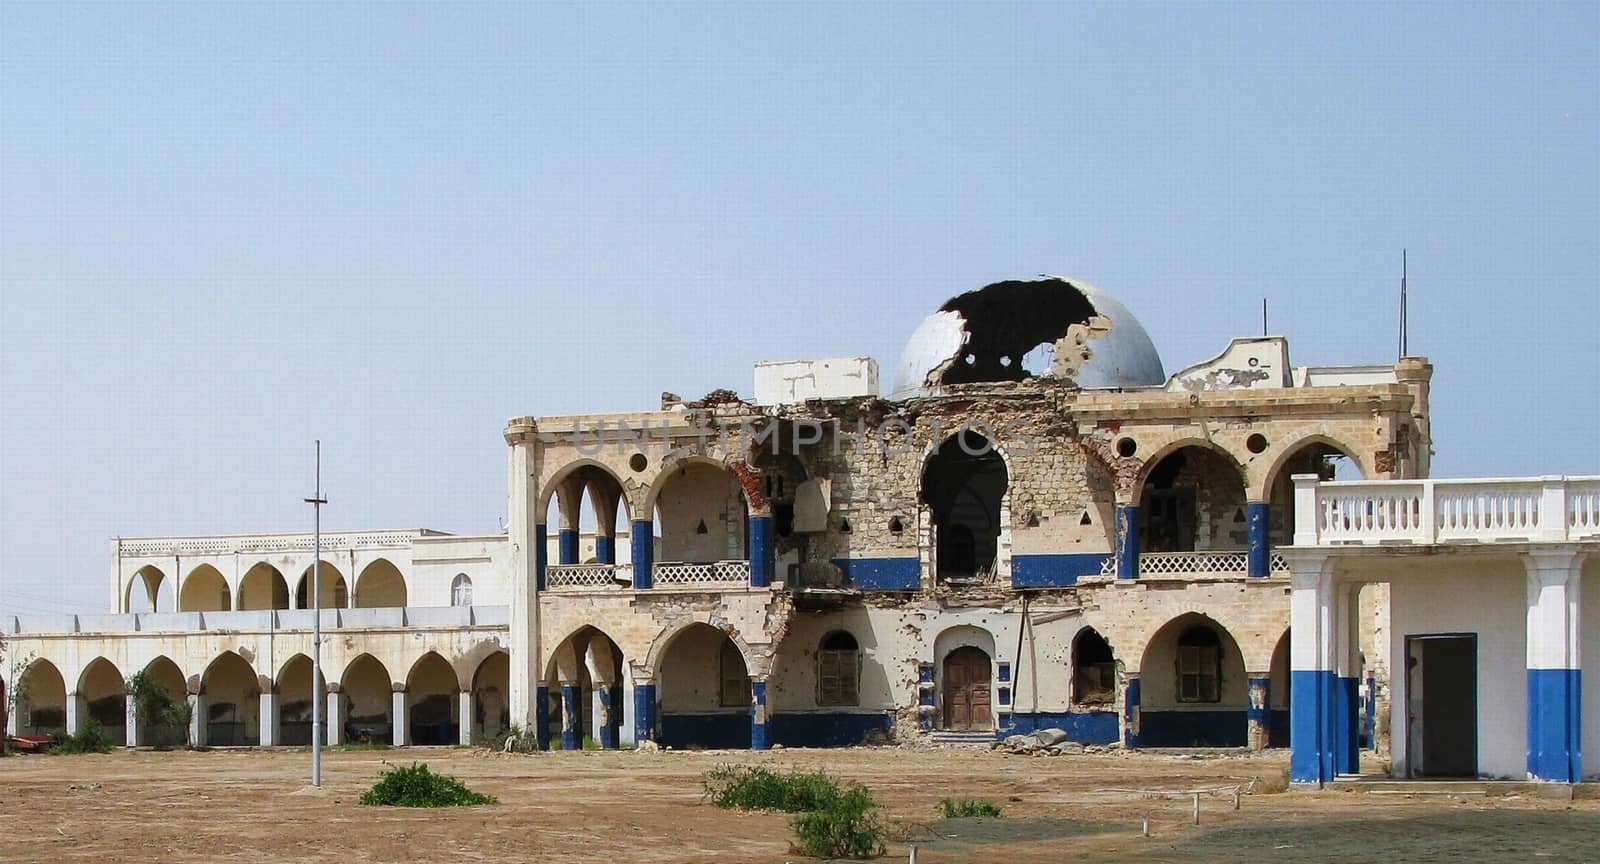 Ruins of former Haile Selassie residence by homocosmicos